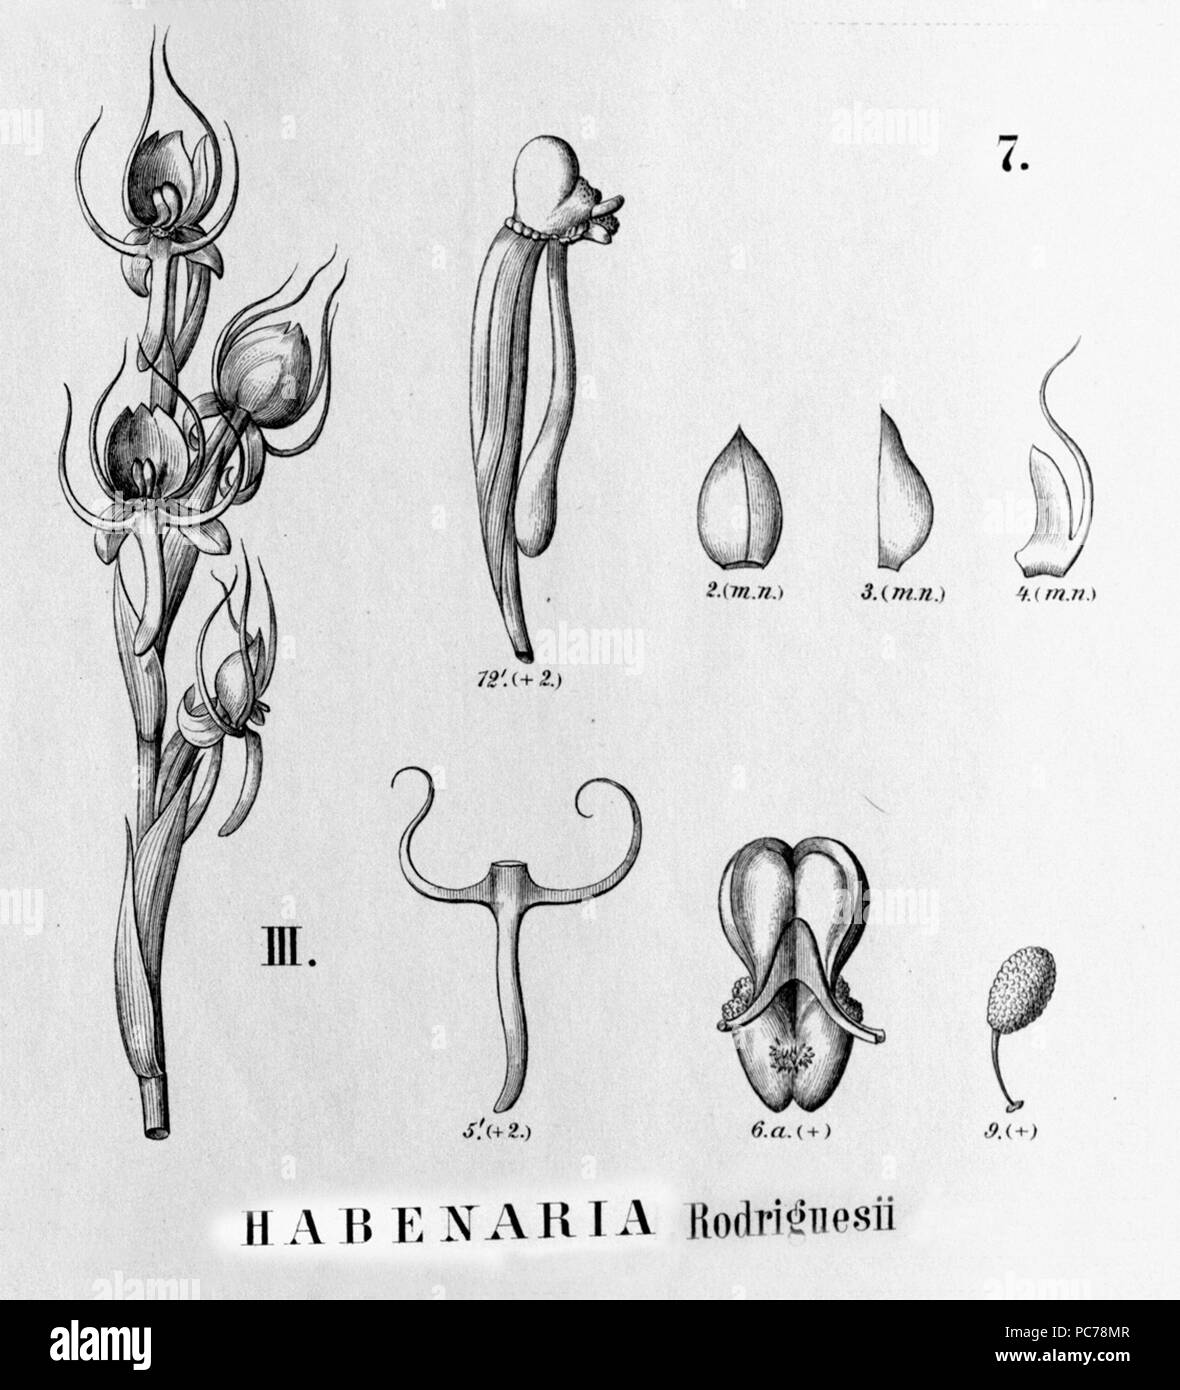 263 Habenaria rodriguesii - cutout from Flora Brasiliensis 3-4-07-fig III Stock Photo